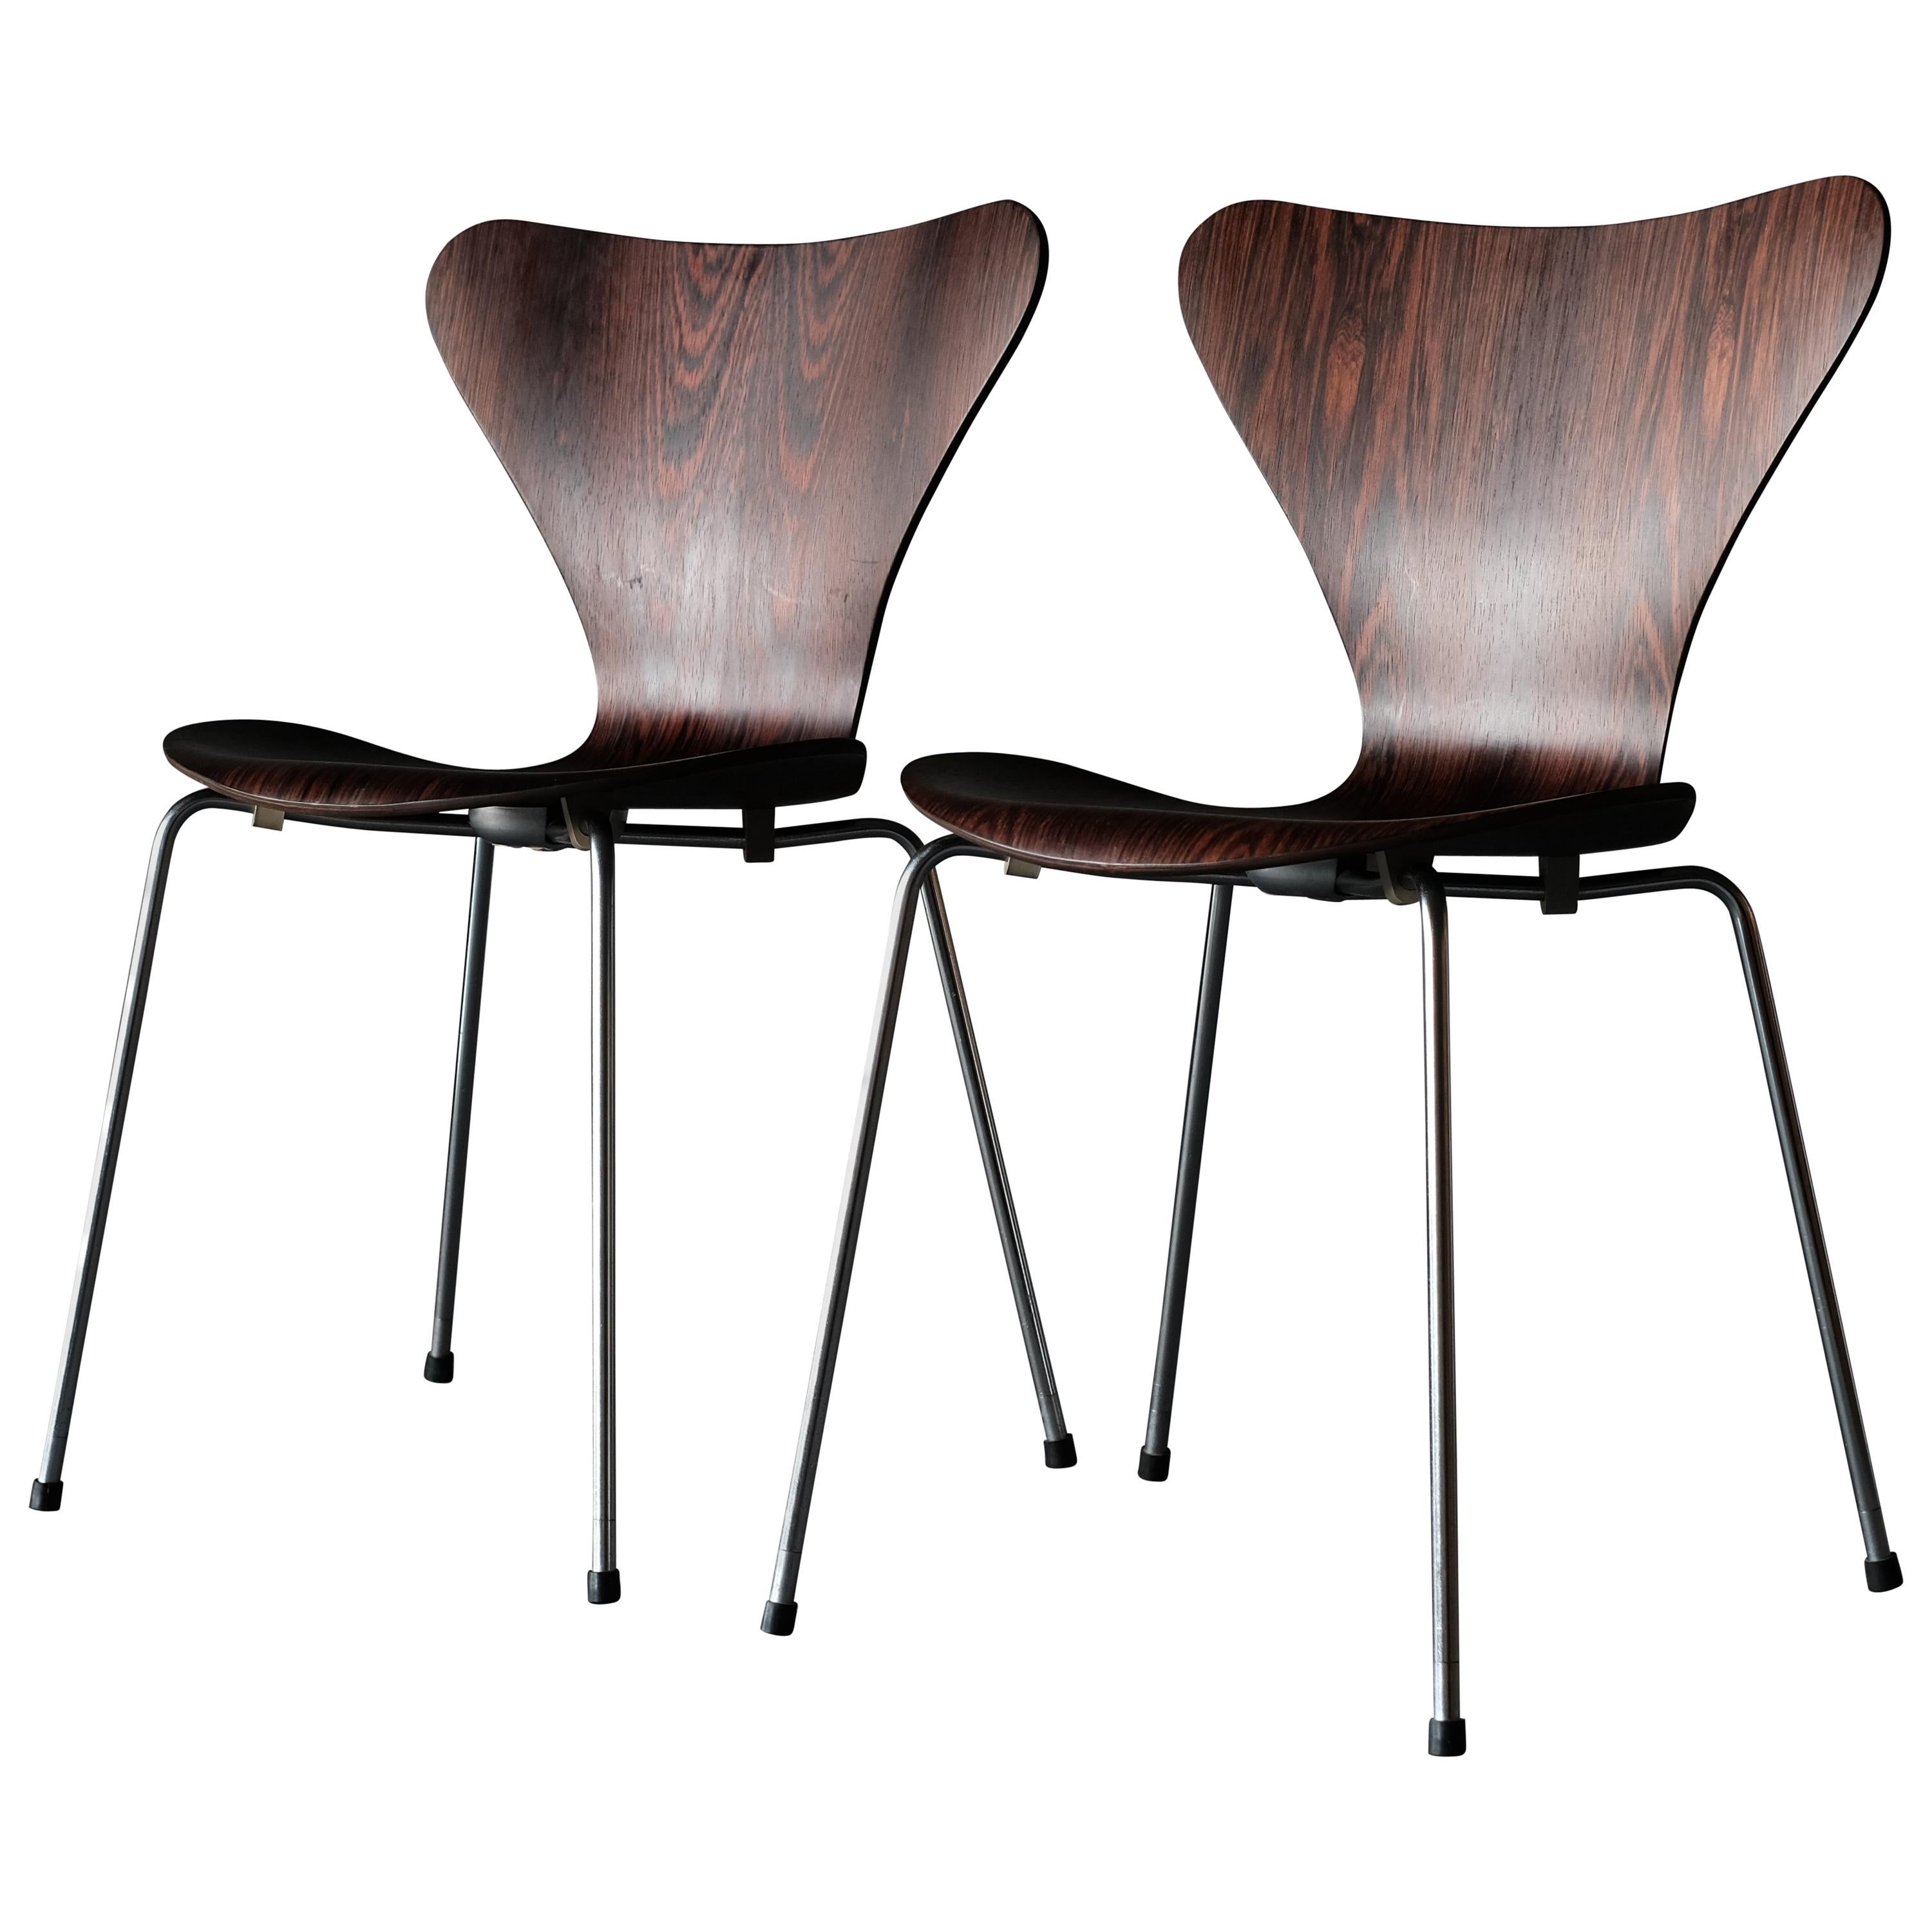 Pair of Arne Jacobsen Chairs in Brazilian Rosewood